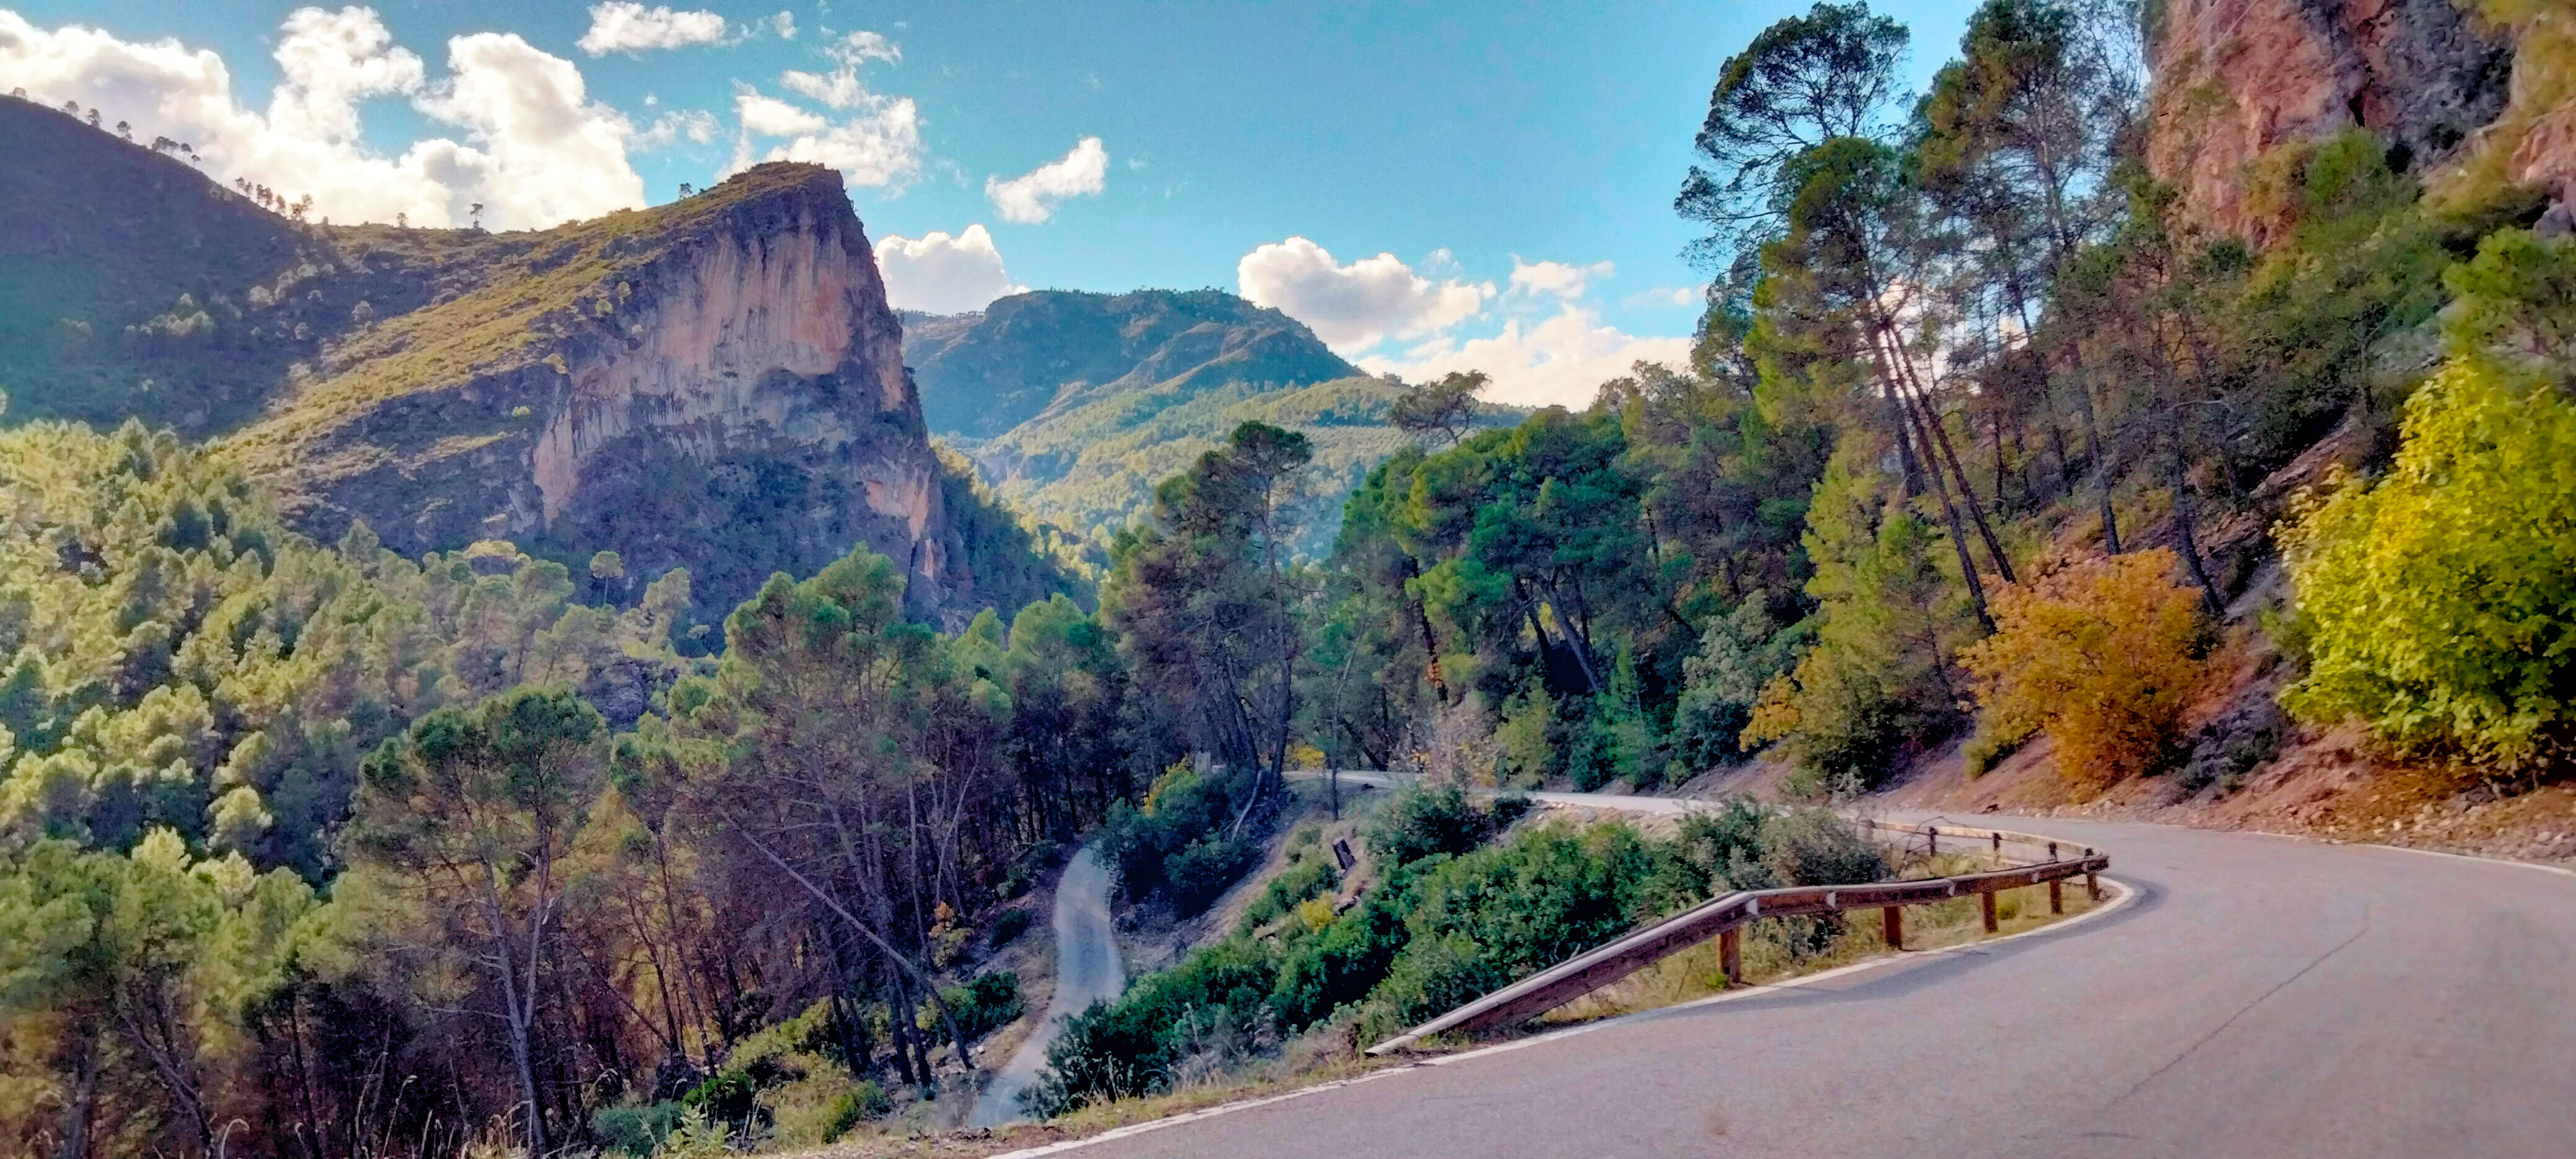 Ruta en moto Sierras de Cazorla, Segura y Las Villas